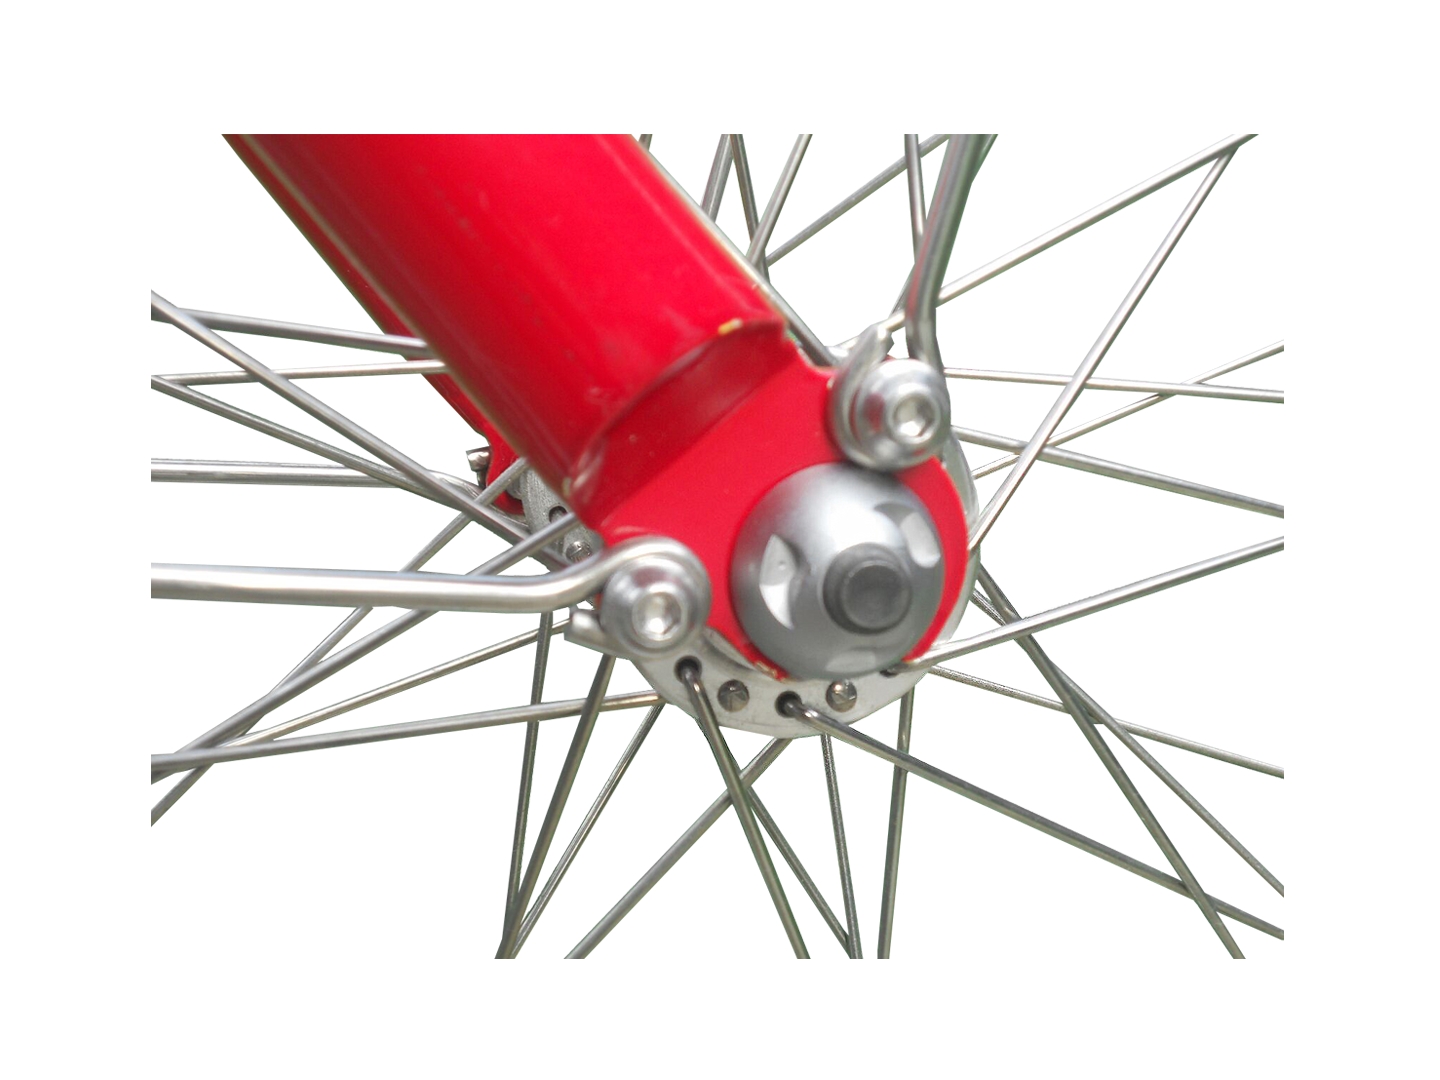 solid axle bike wheel